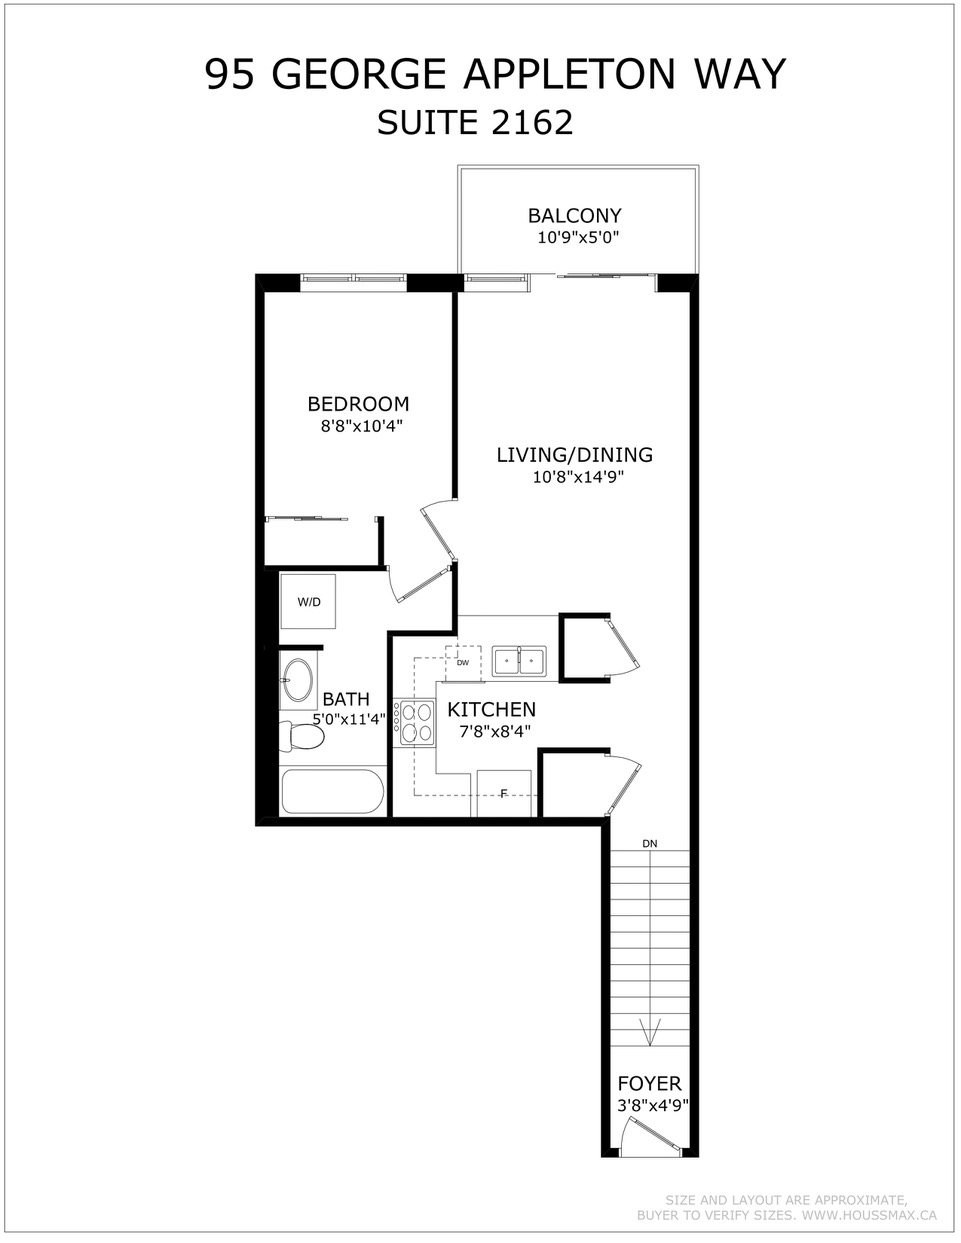 Floor plans for 95 George Appleton Way Unit 2162.